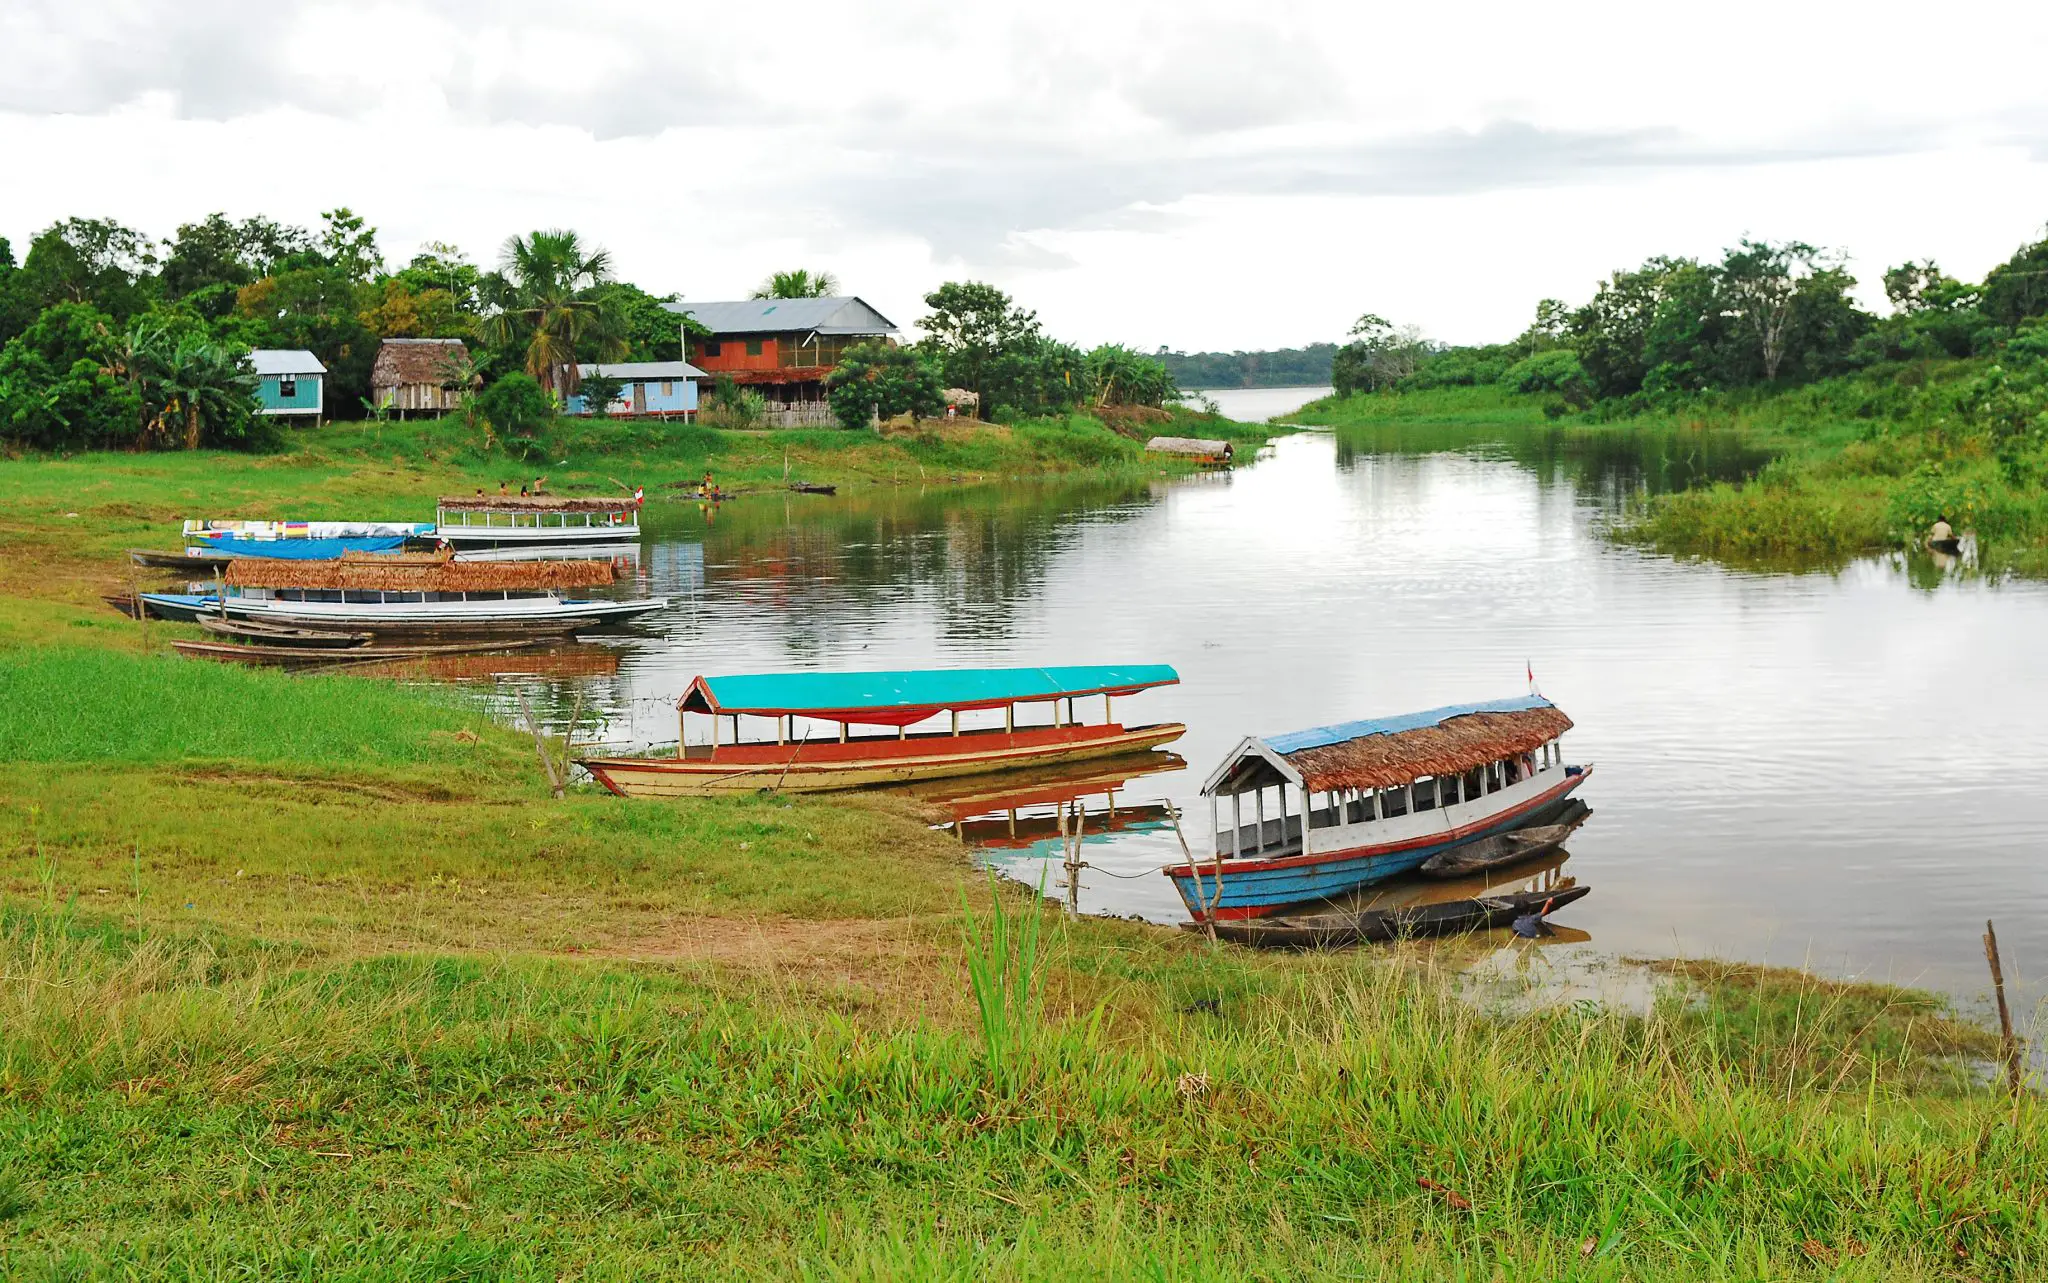 Crossing picket lines through Tarapoto and Yurimaguas to reach the Amazon